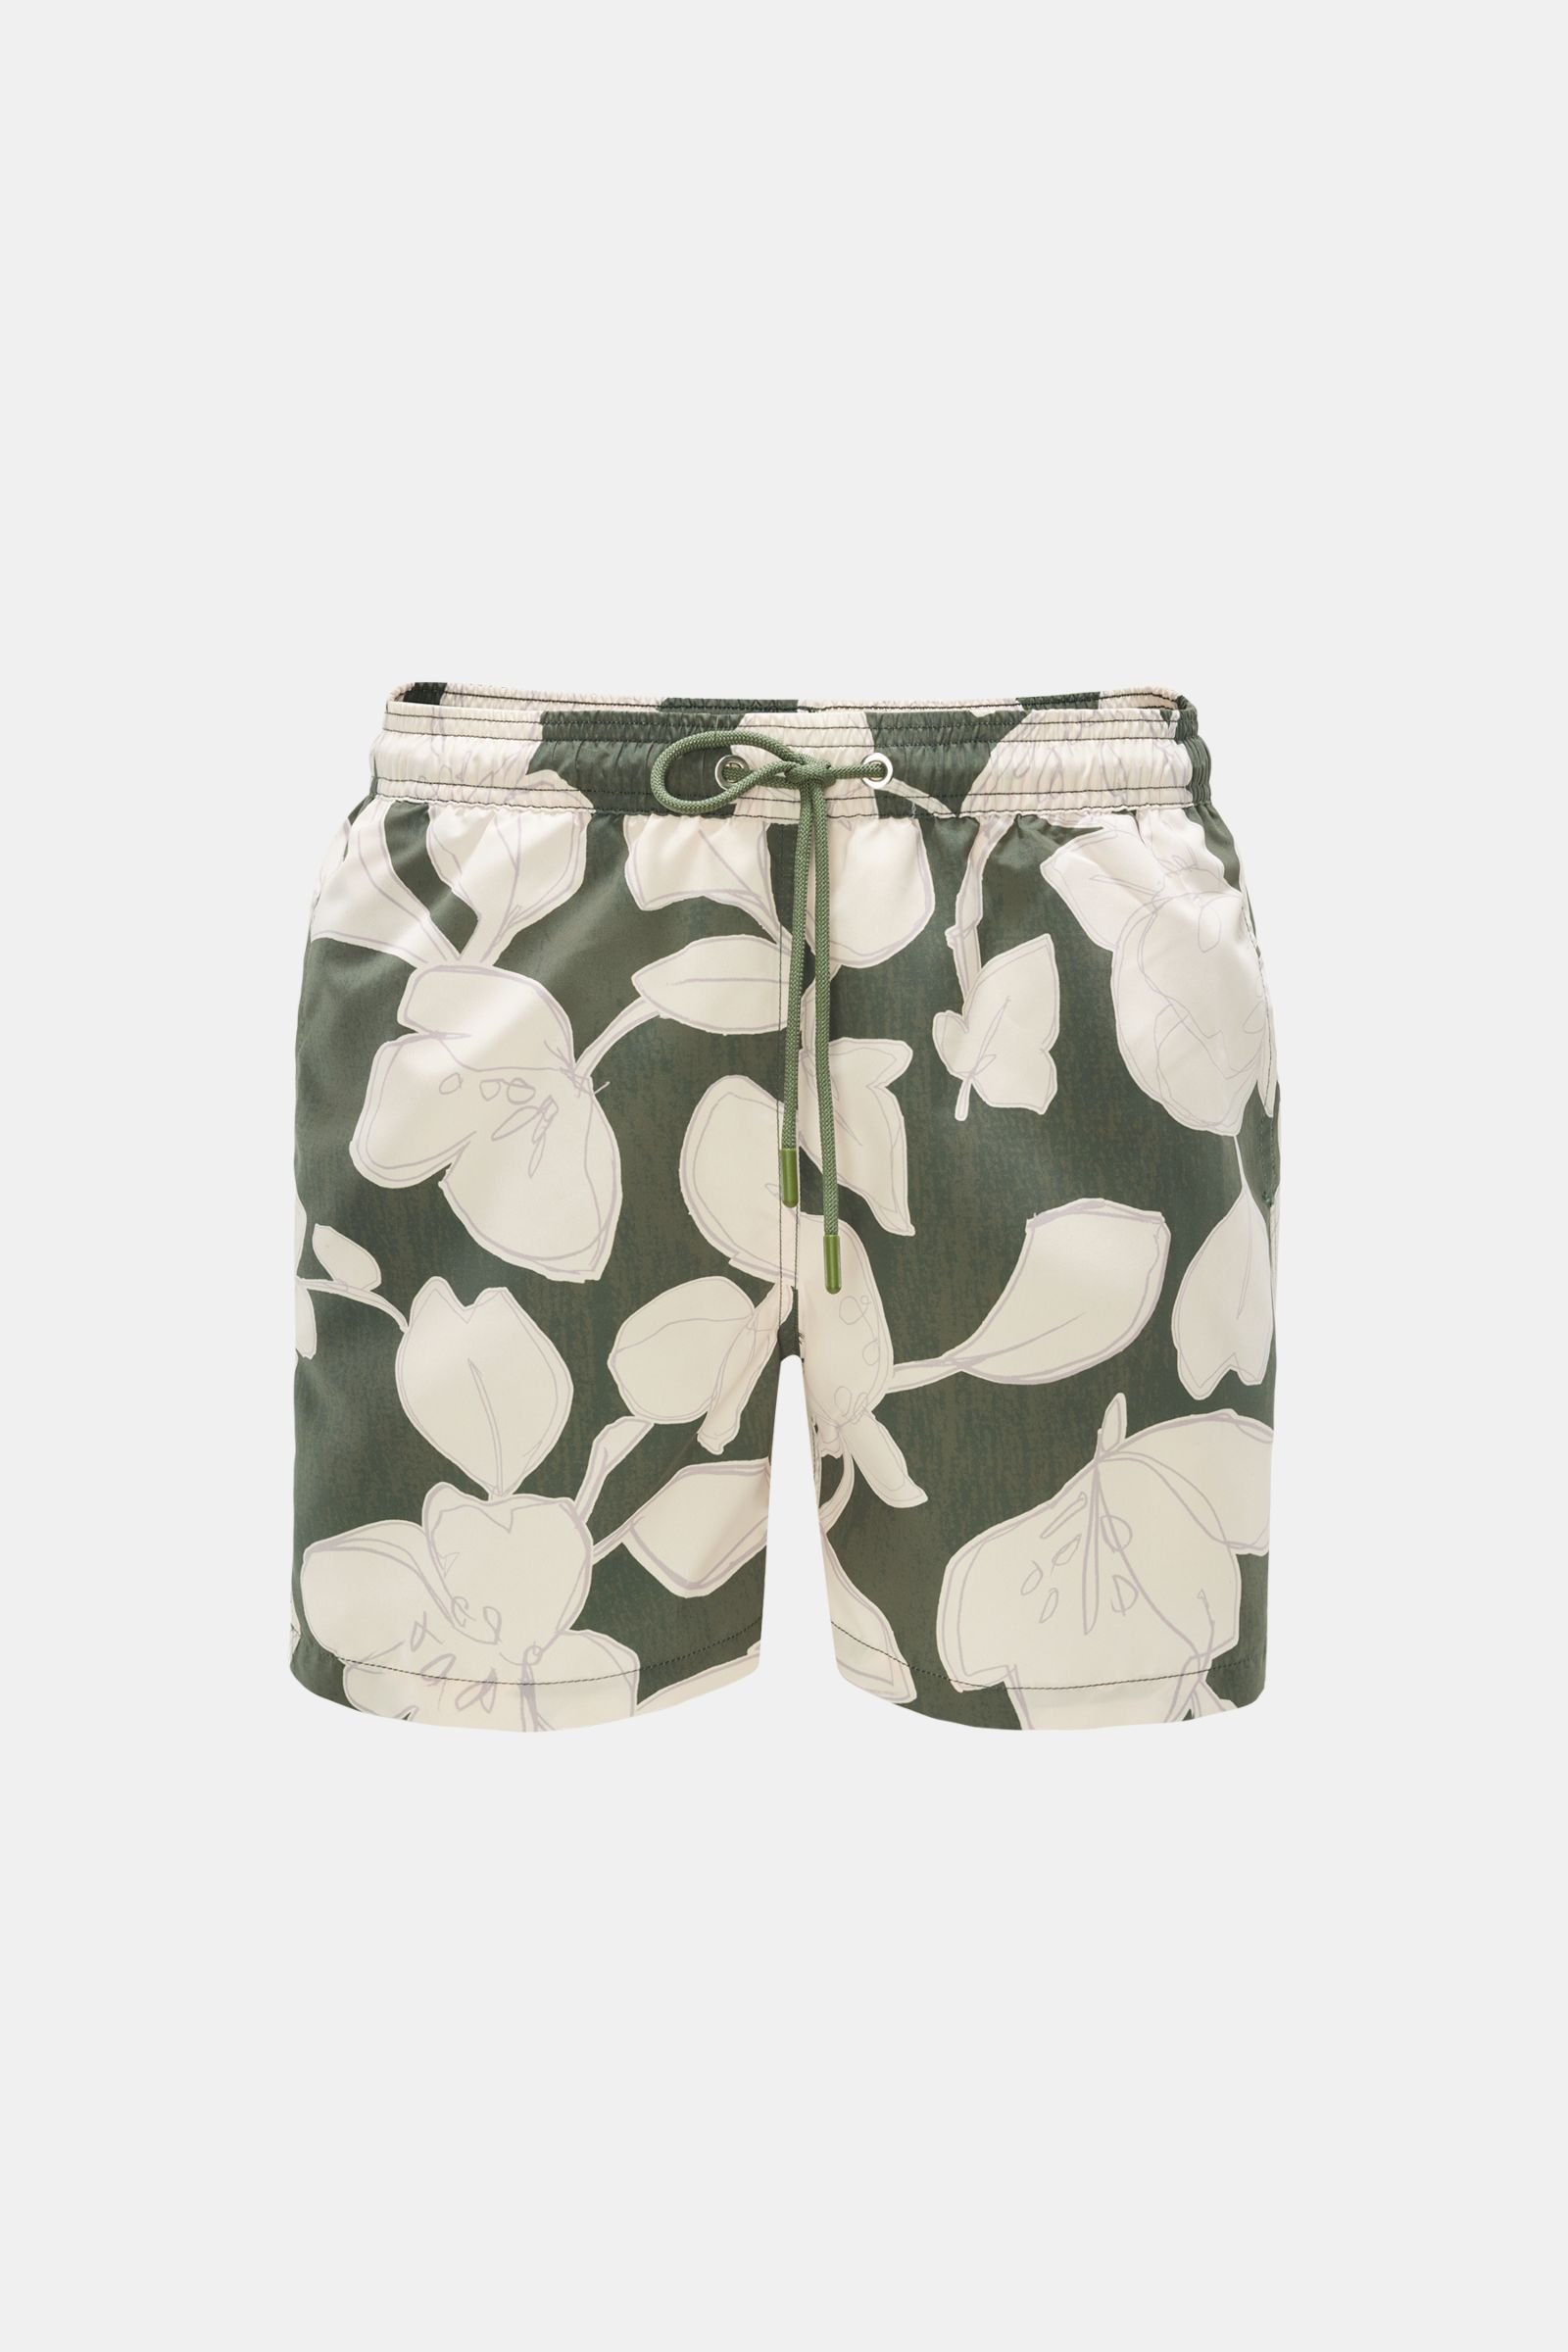 Swim shorts olive/beige patterned